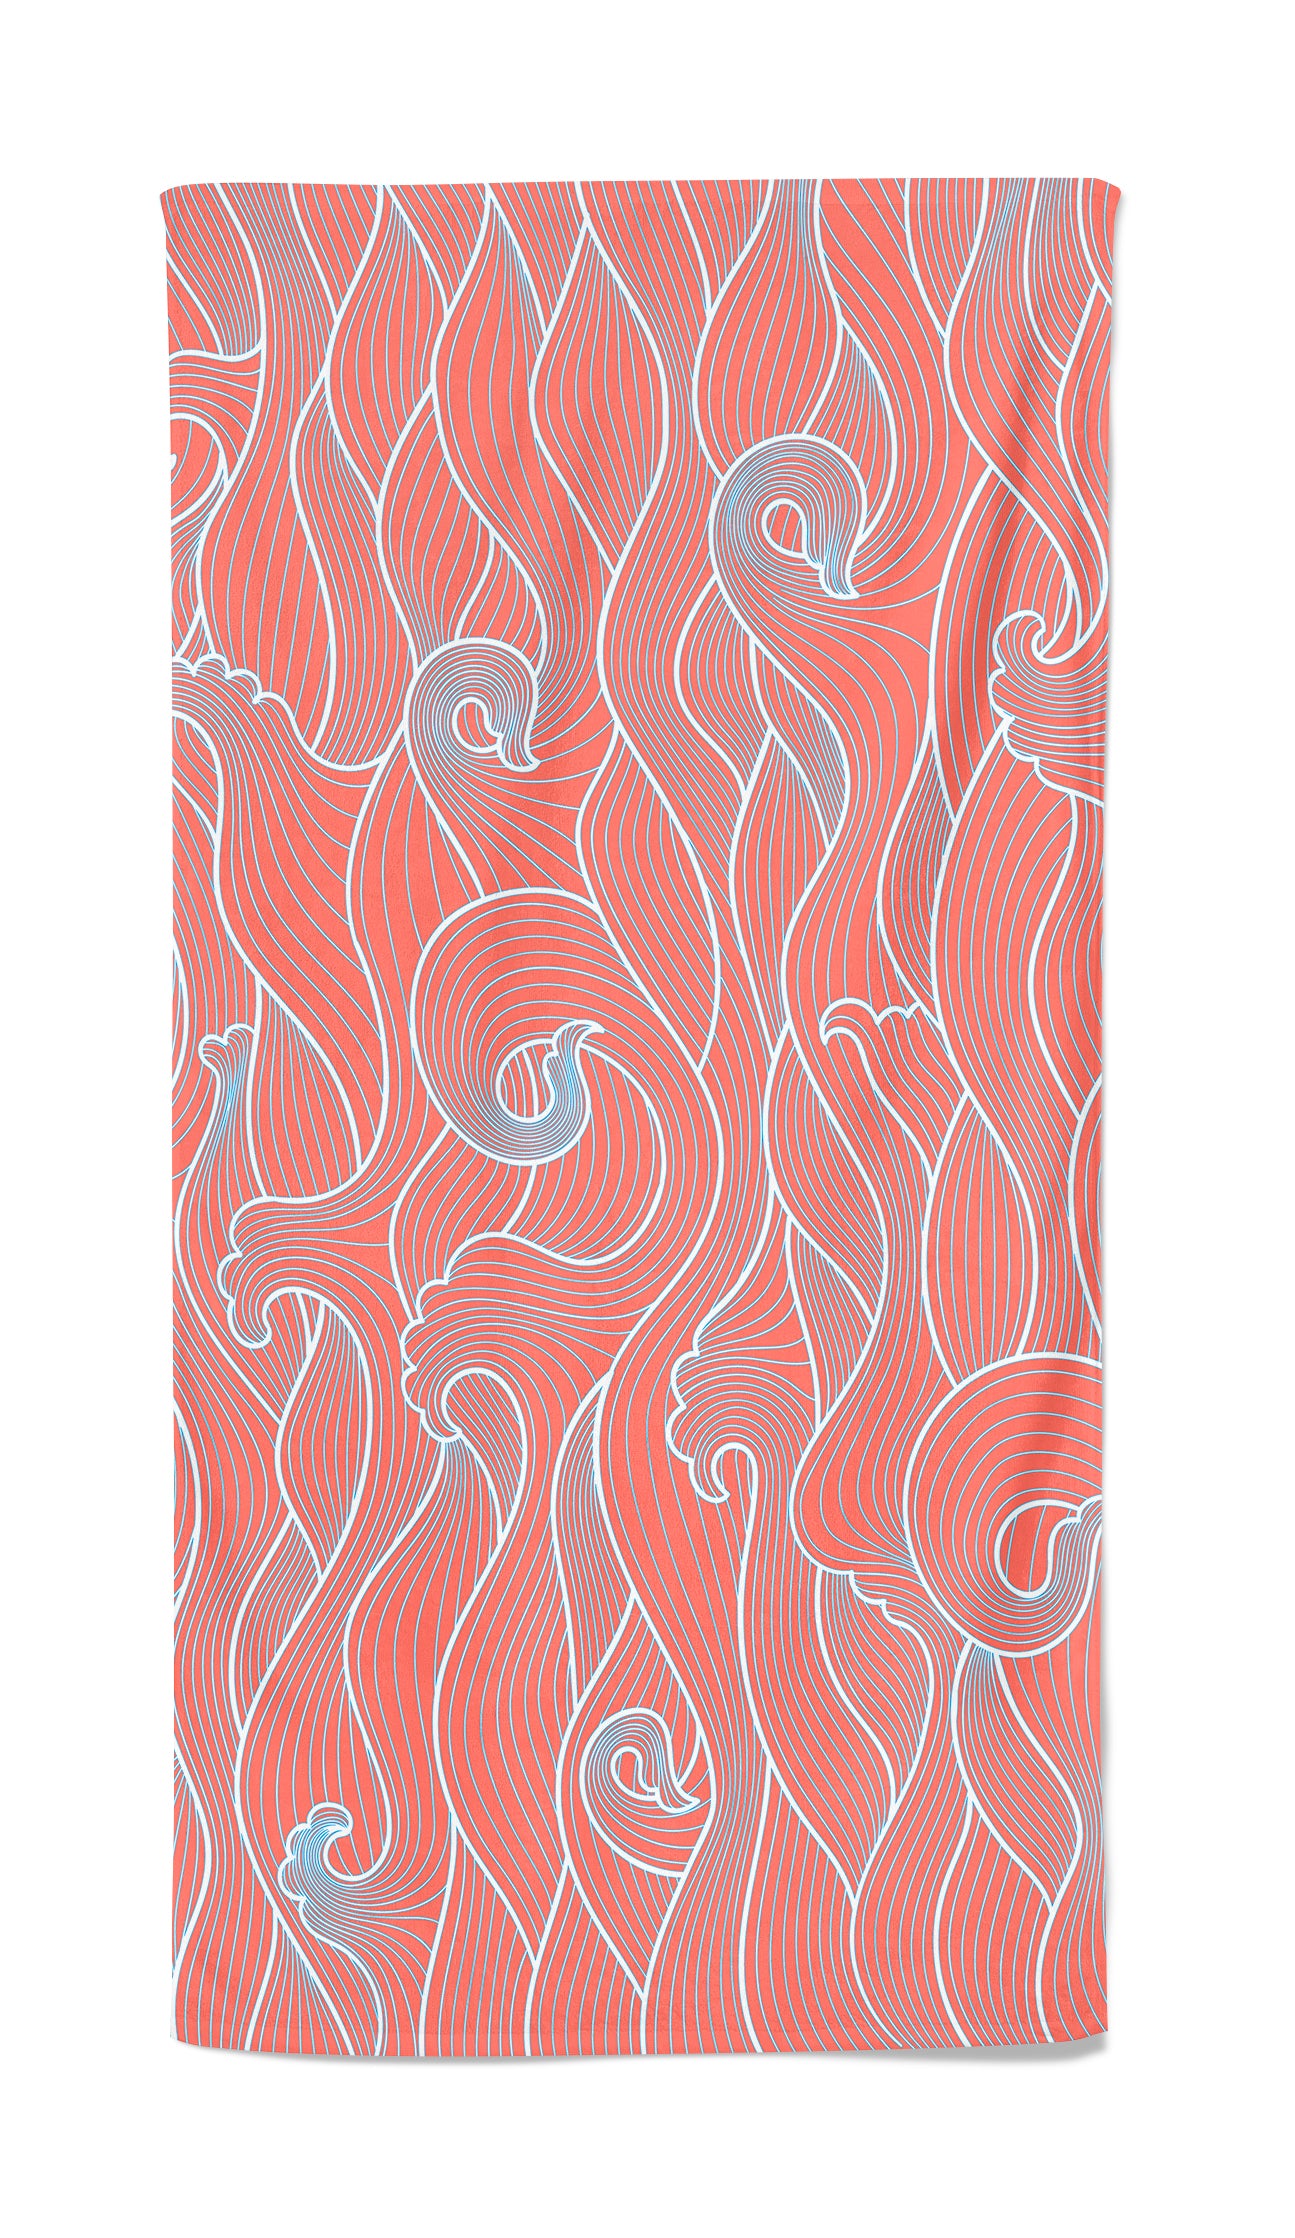 UPF 50 Sol Towel/Wrap - Peach Wave